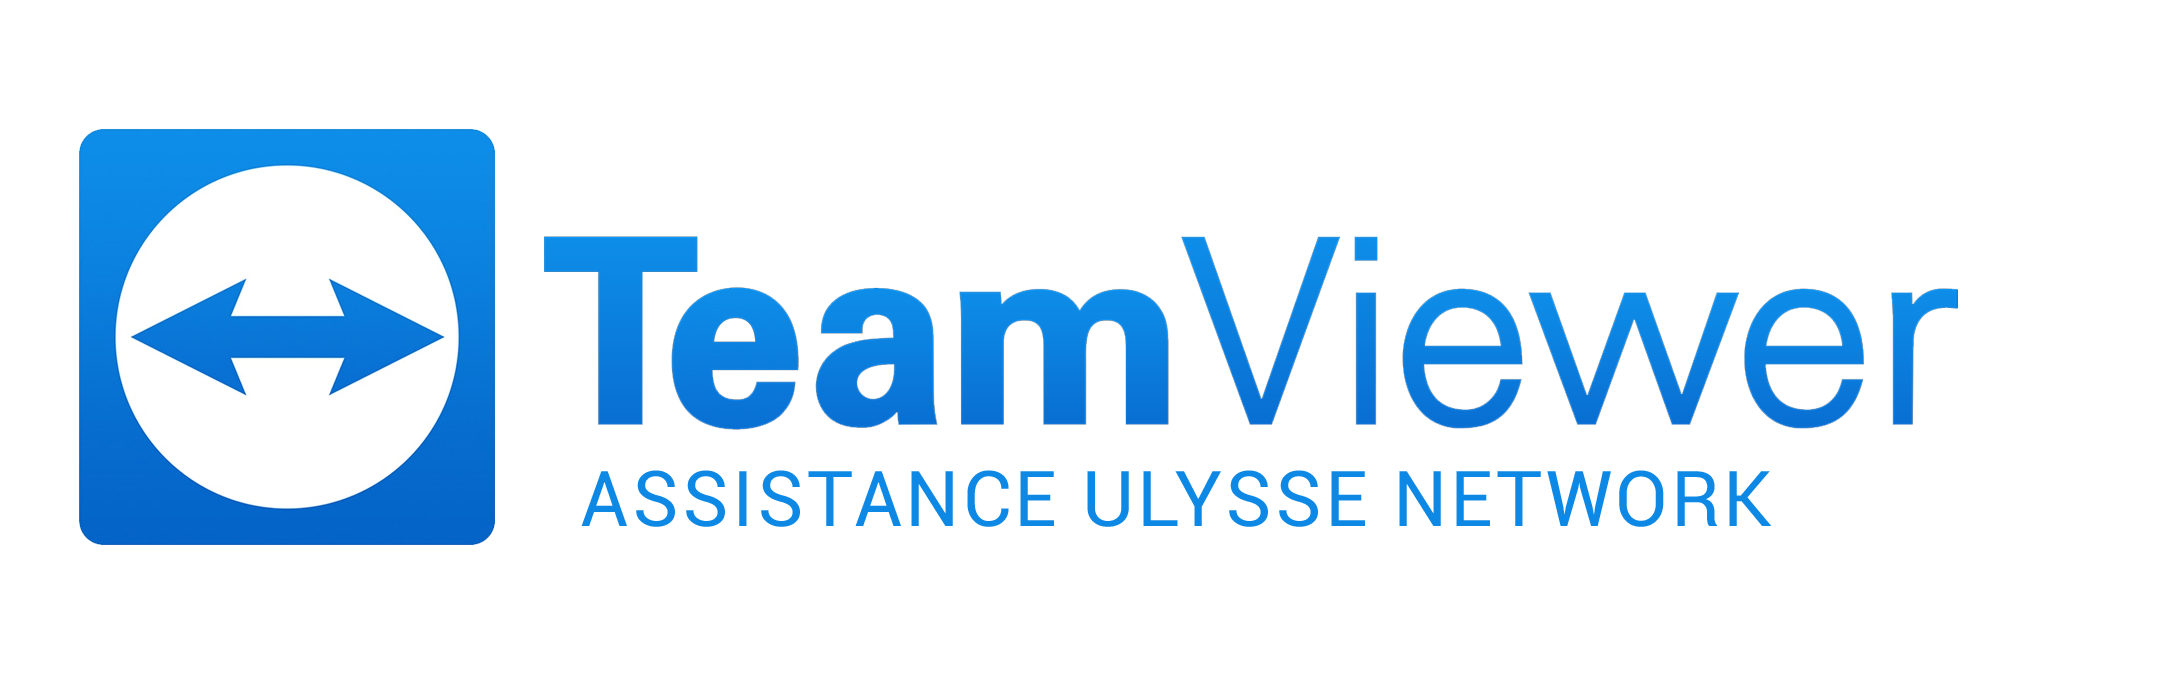 Logo de Teamviewer, logiciel de télémaintenance/></a>
	  </div>

	  <div class=